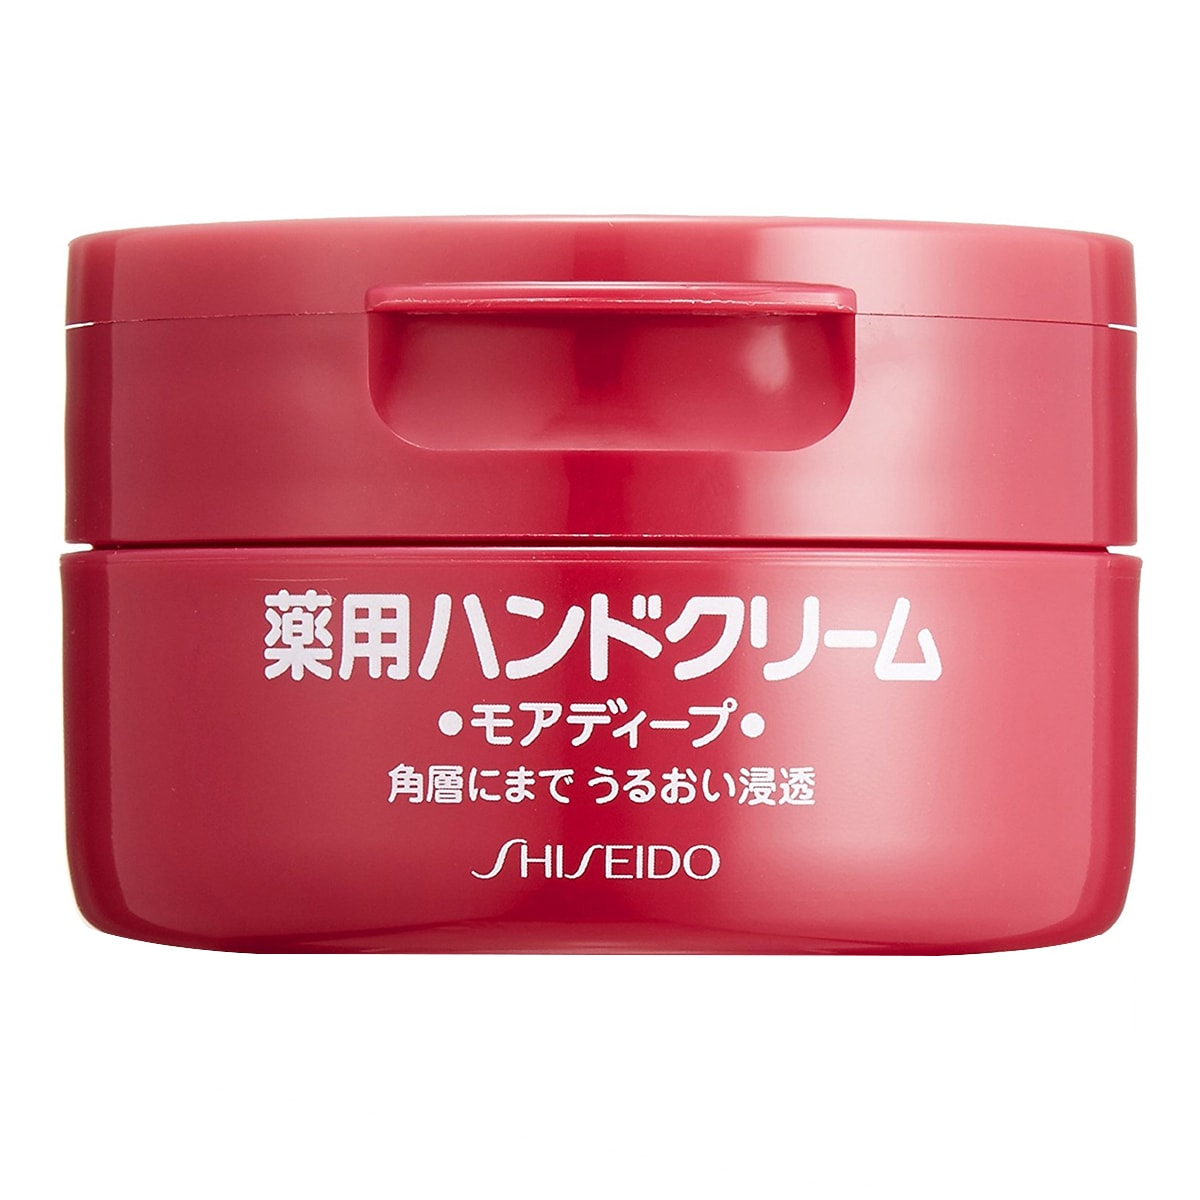 Yamibuy.com:Customer reviews:Medicated Hand Cream 100g